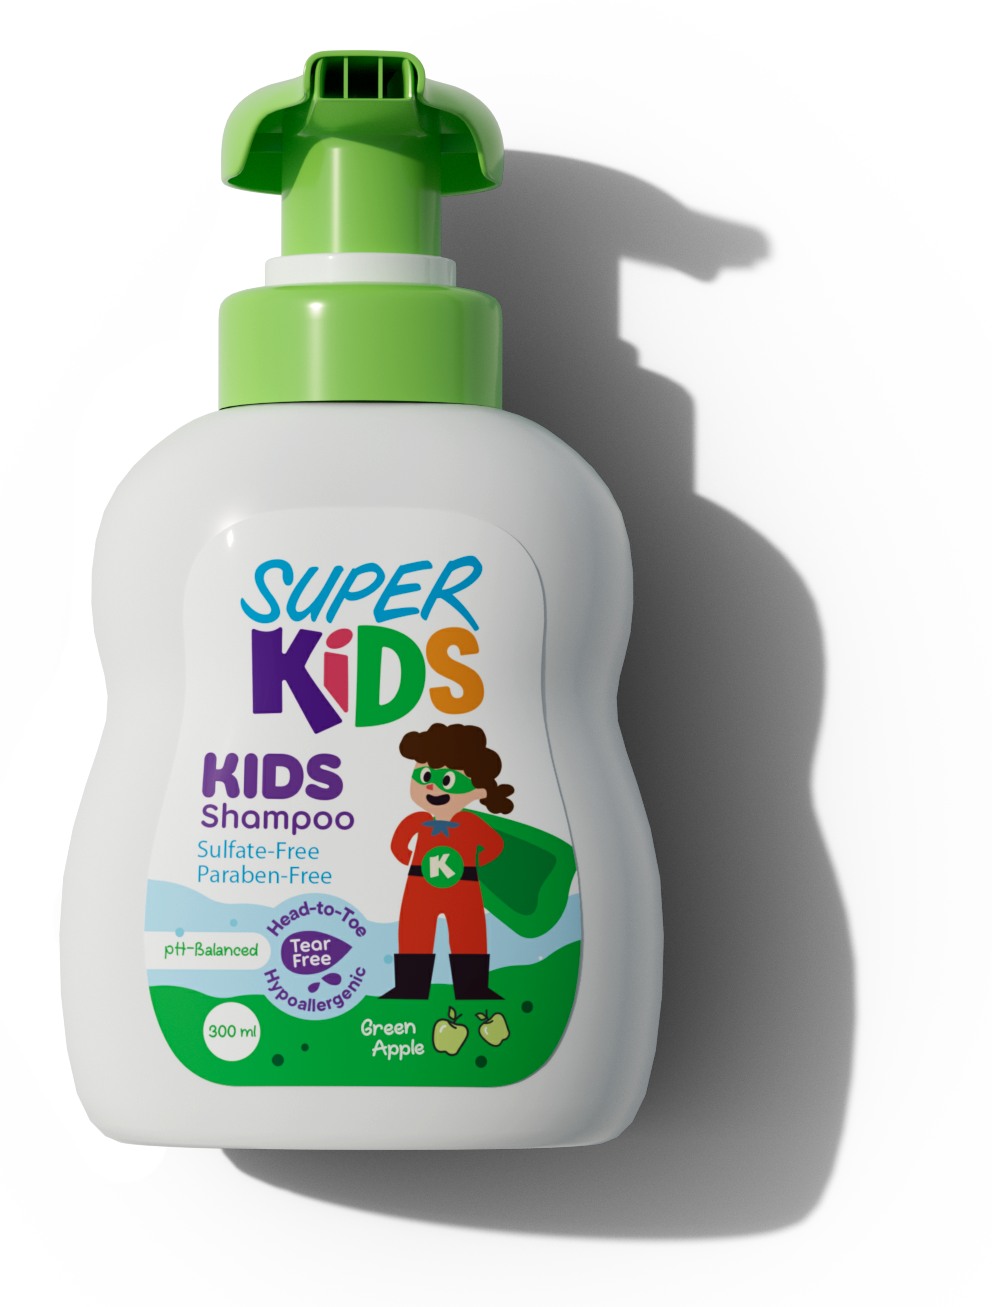 Superkids Kids Shampoo Green Apple Fragrance